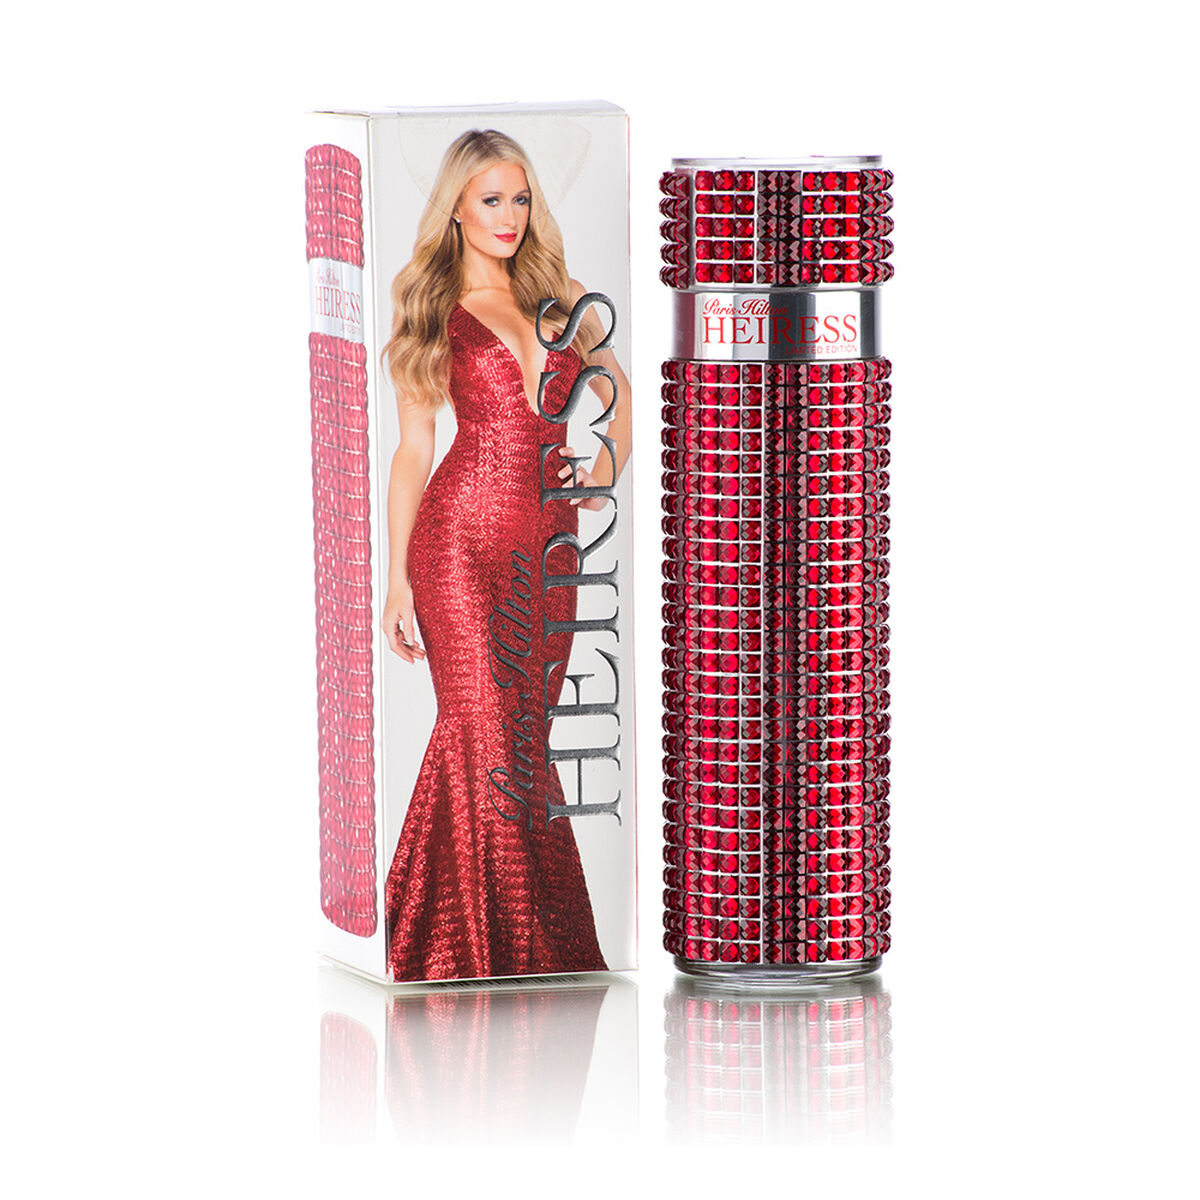 Perfume Paris Hilton Paris Hilton 100 ml